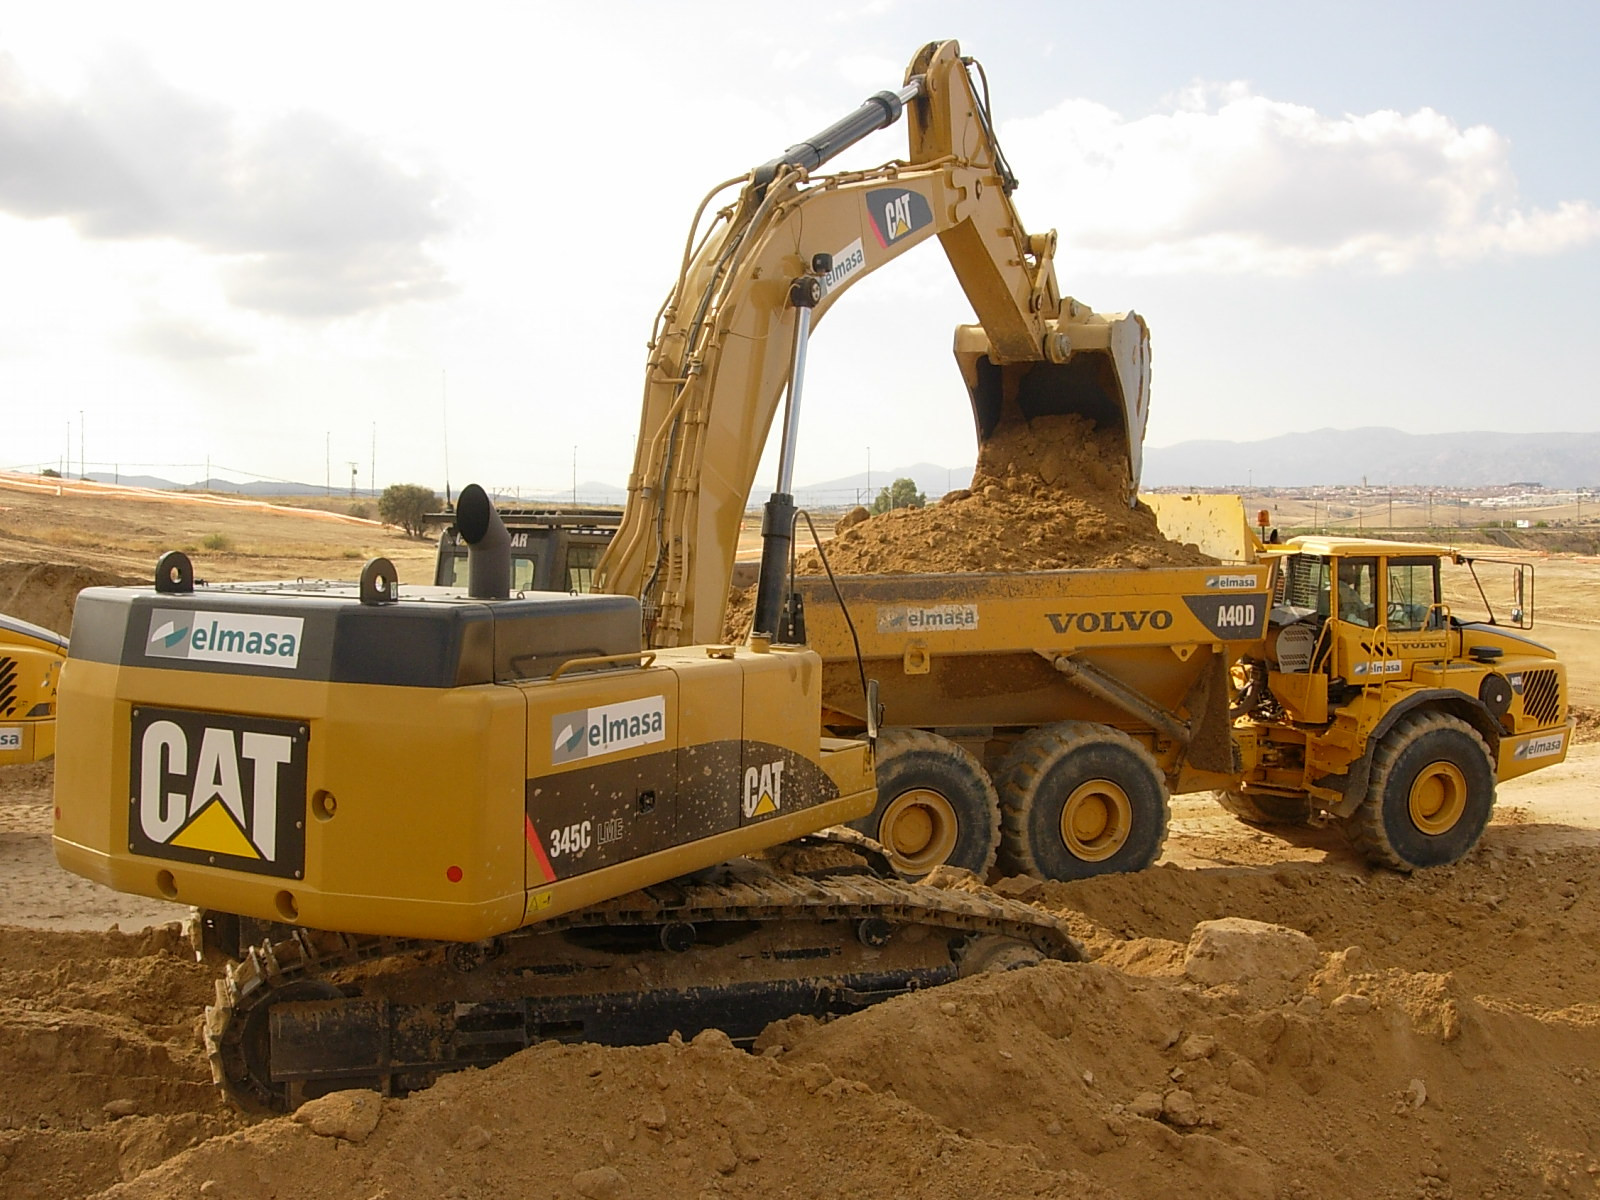 345C LME, Caterpillar, Maquinaria, Volvo A40D, Retroexcavadora, Dumper articulado, Excavator